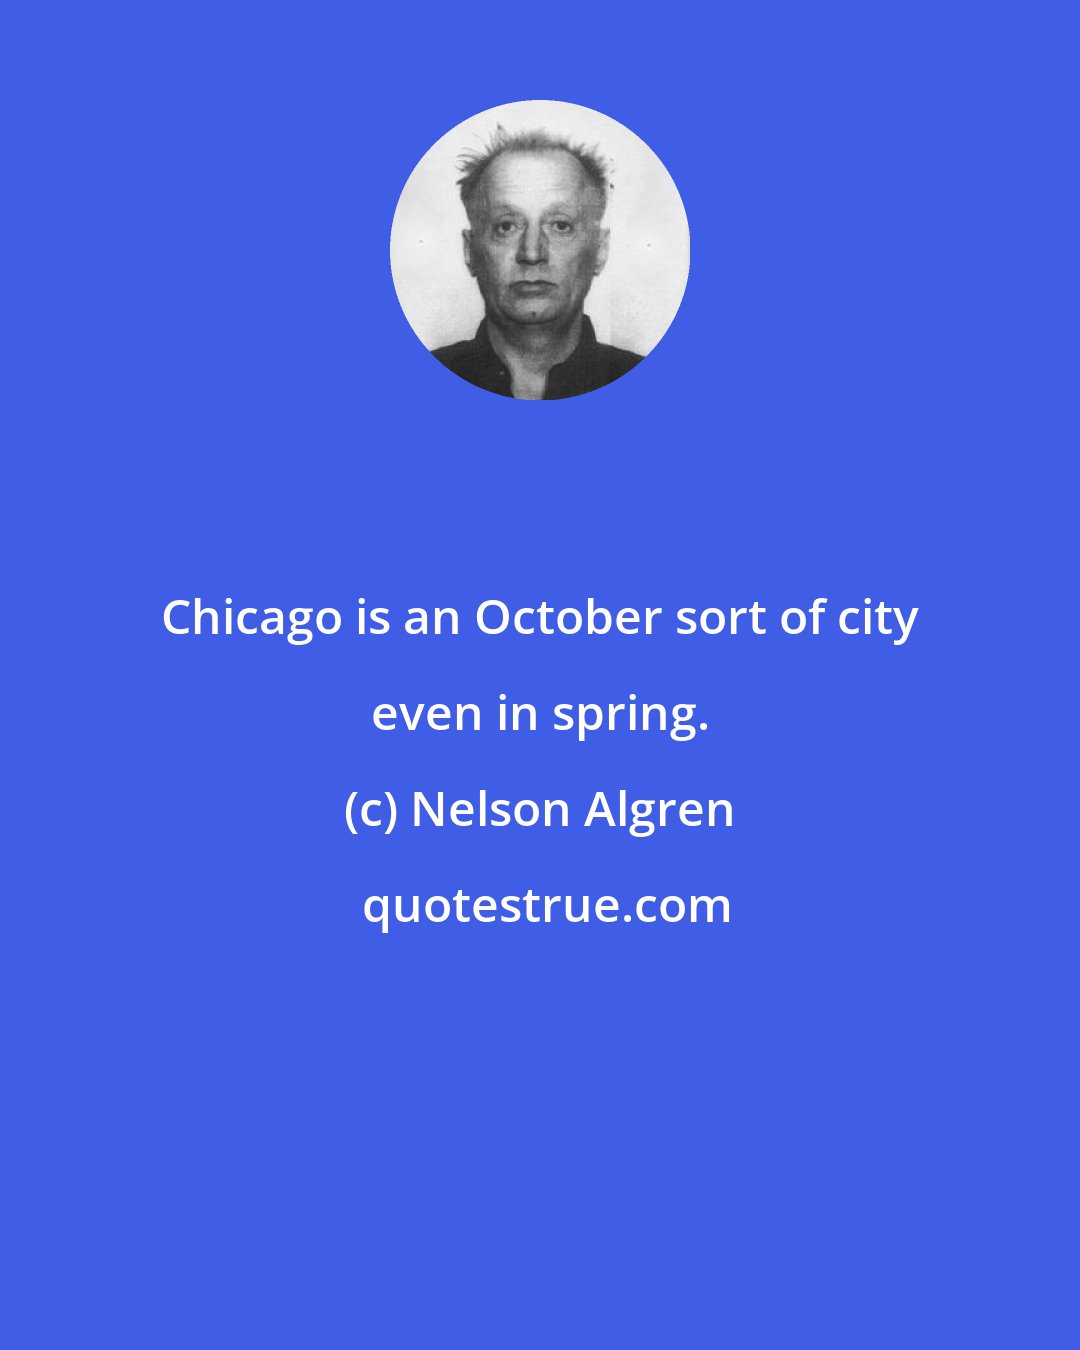 Nelson Algren: Chicago is an October sort of city even in spring.